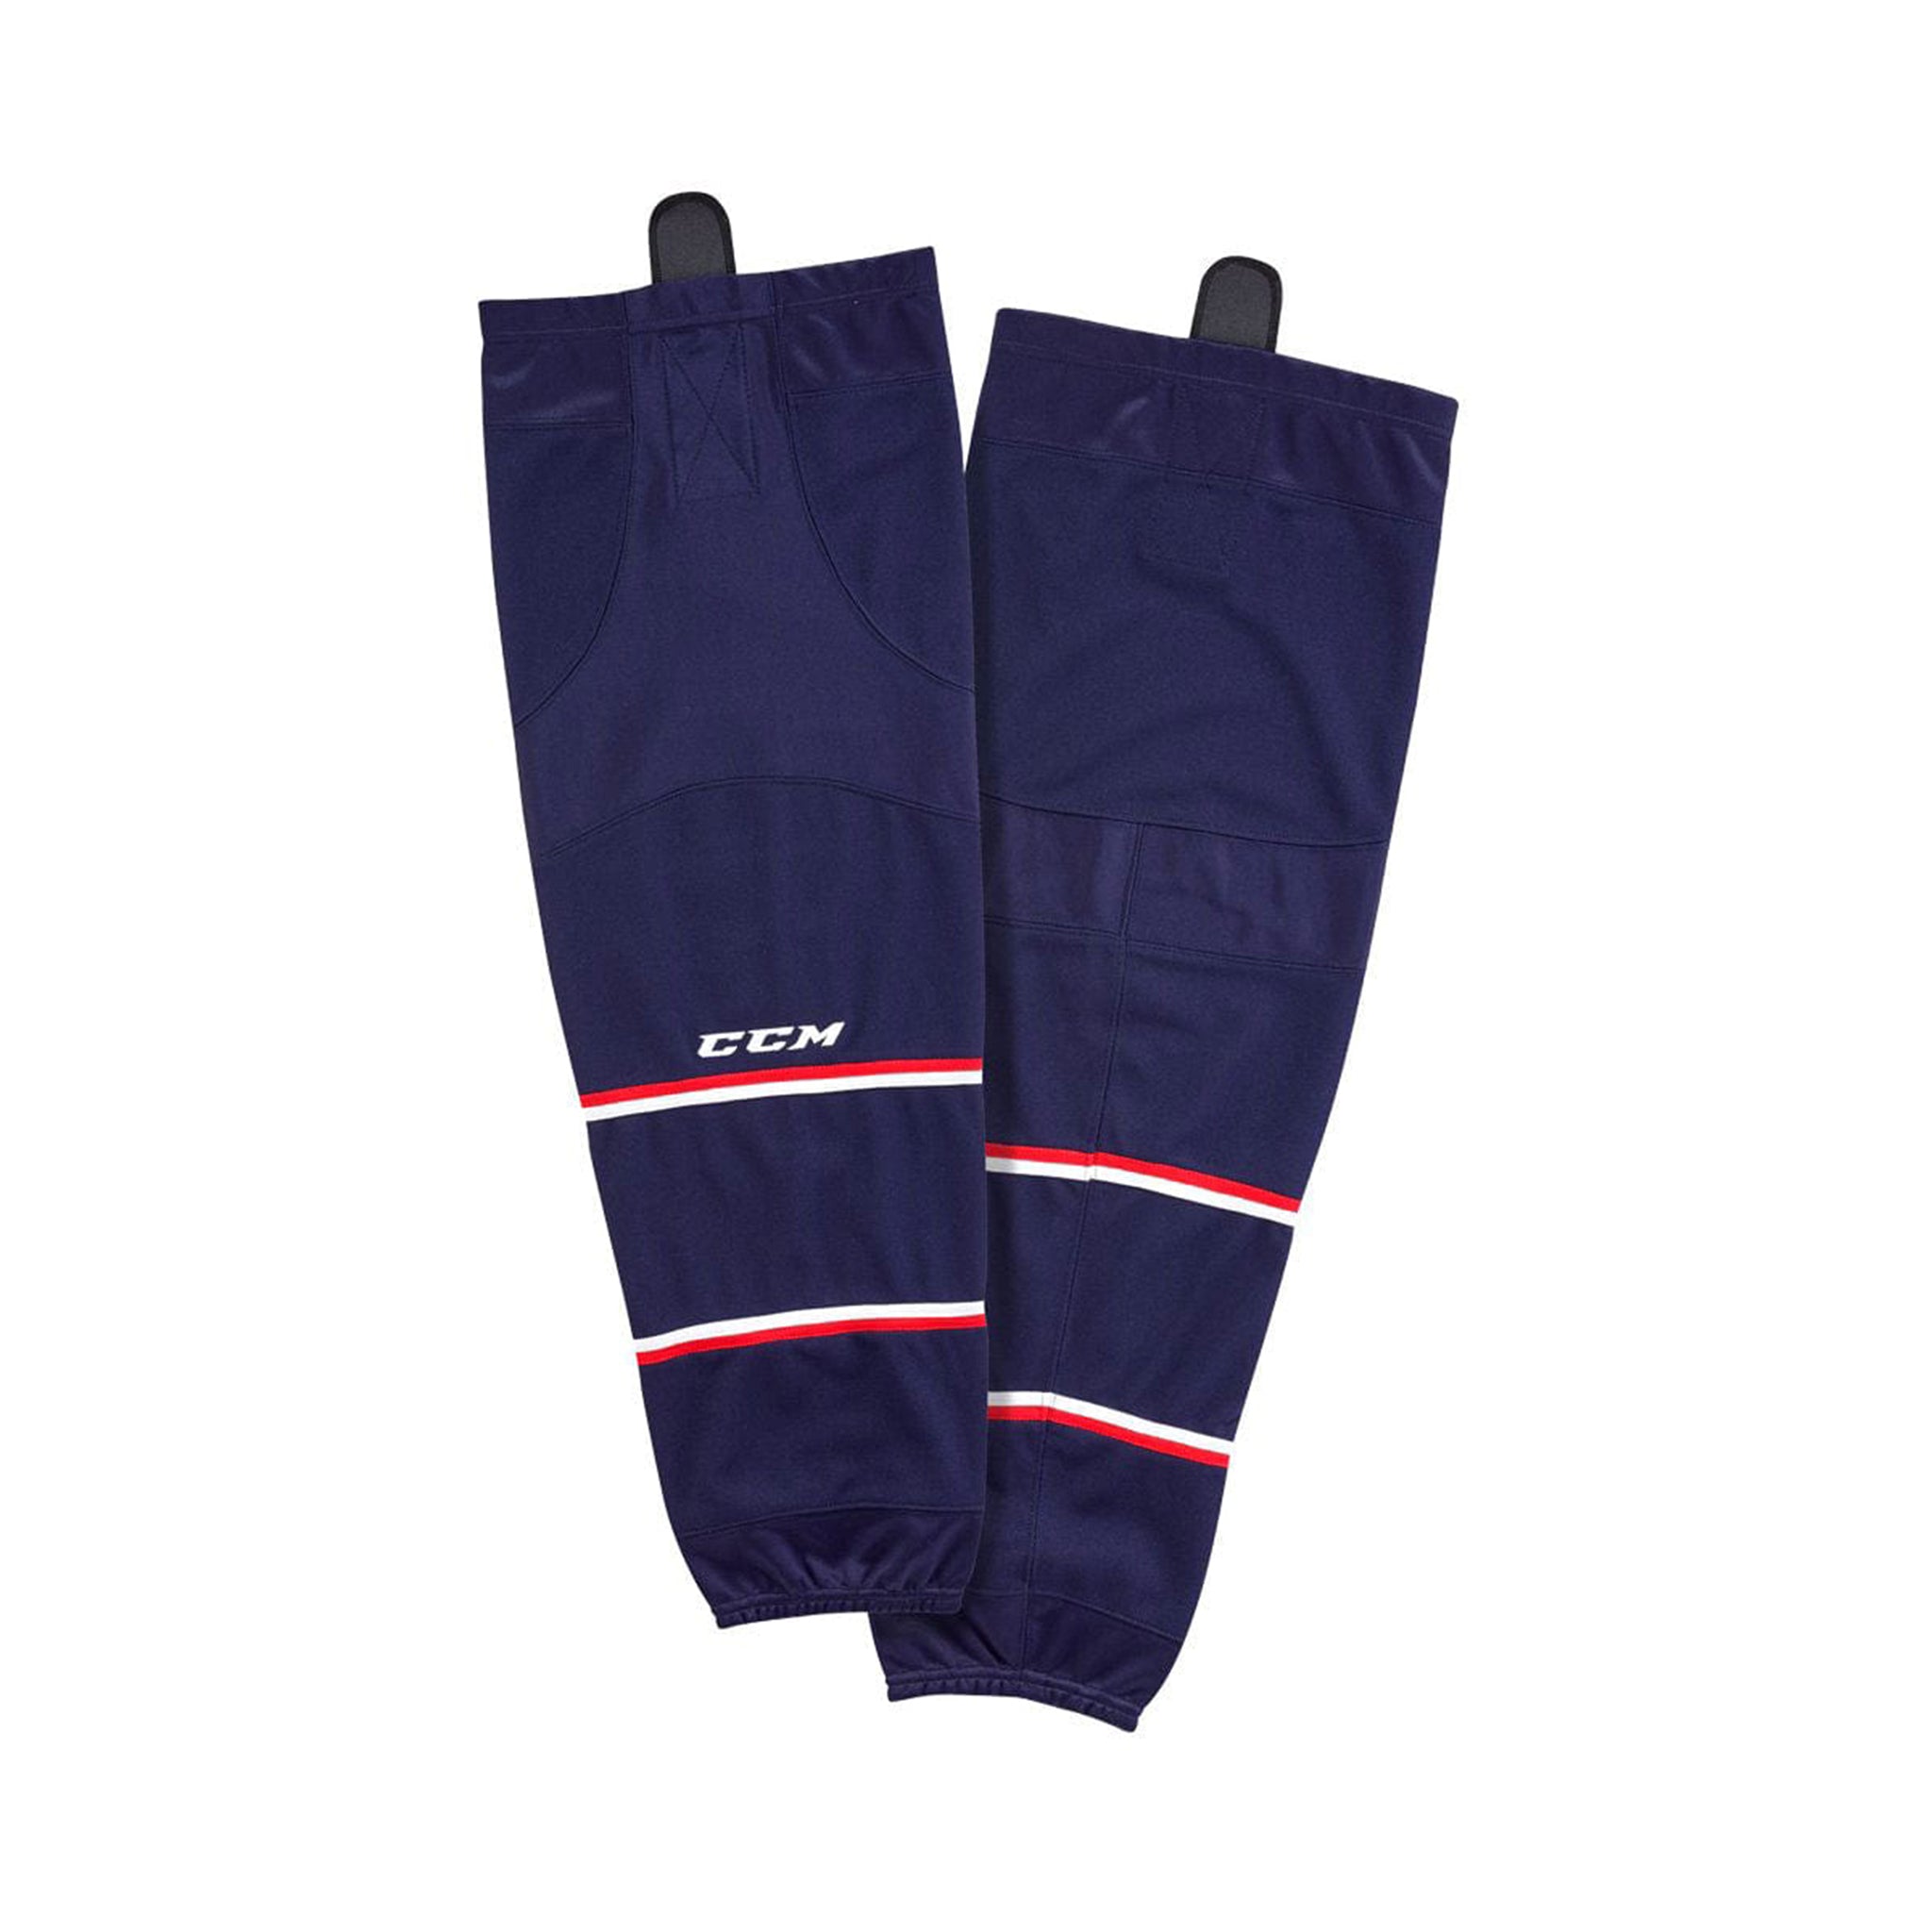 Monkeysports Columbus Blue Jackets Mesh Hockey Socks in White Size Intermediate